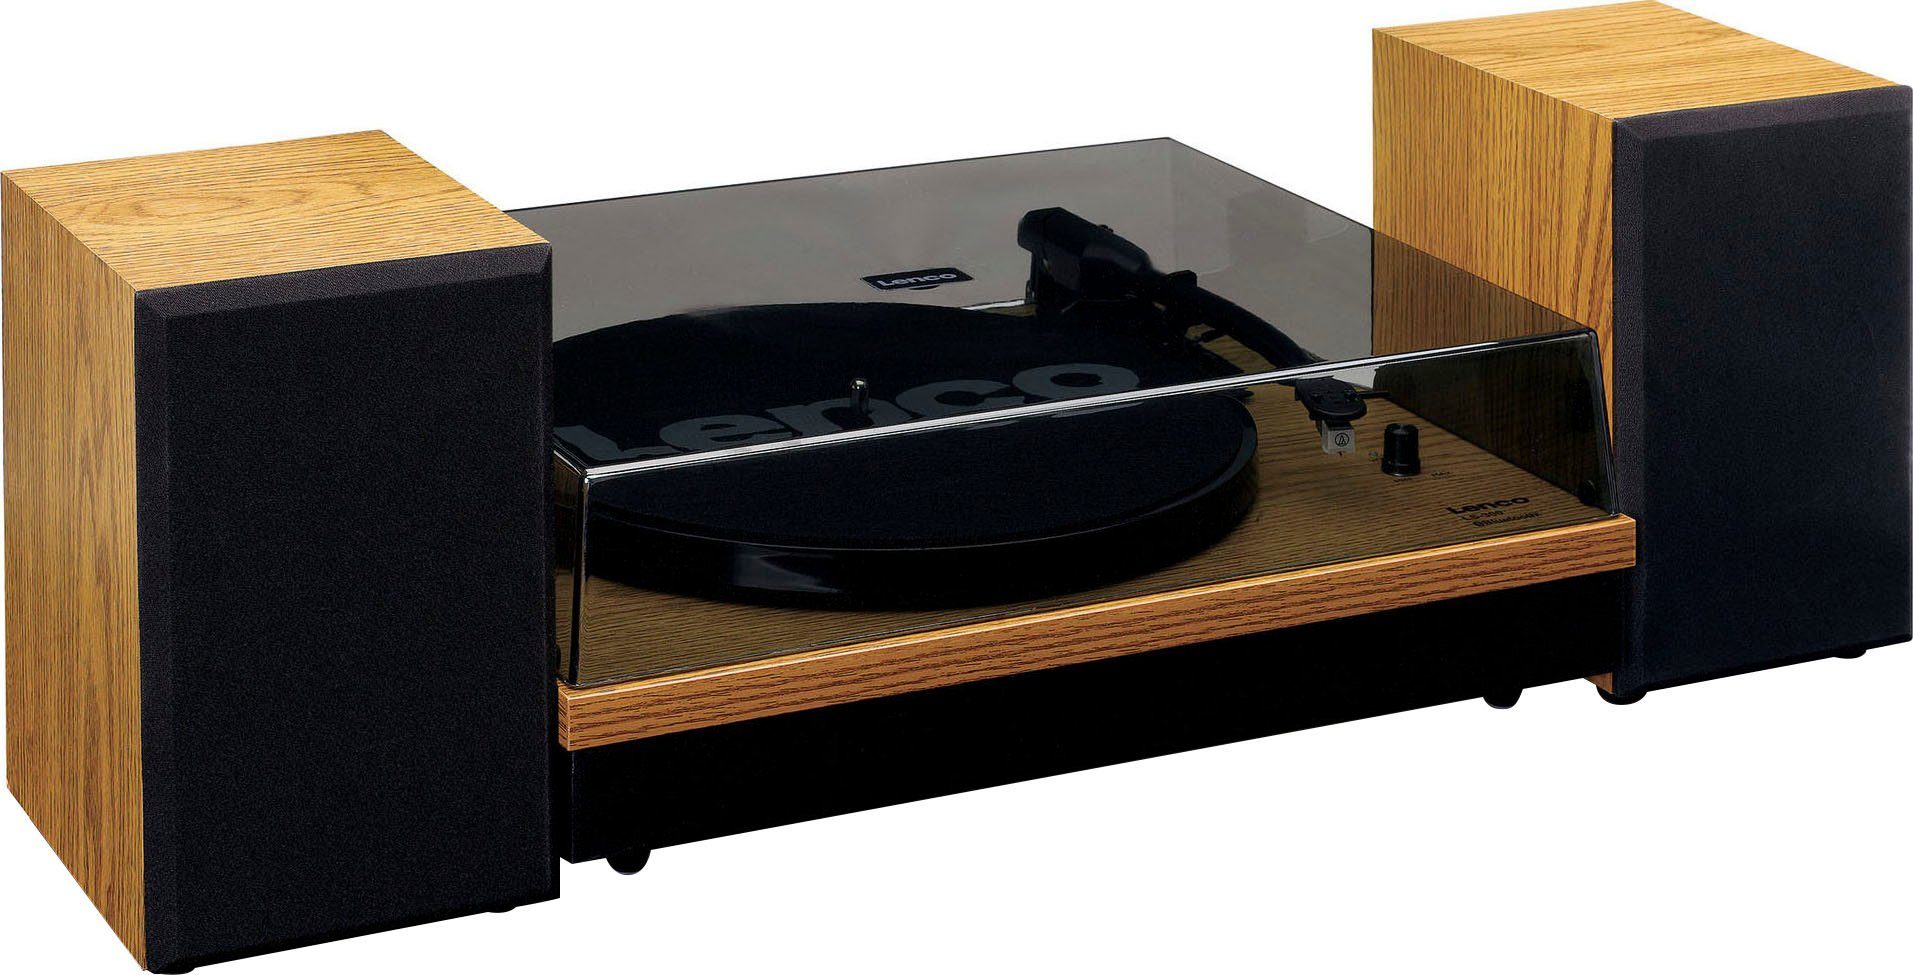 Lautsprechern Holz LS-300WD (Riemenantrieb) mit Lenco Plattenspieler ext. Plattenspieler